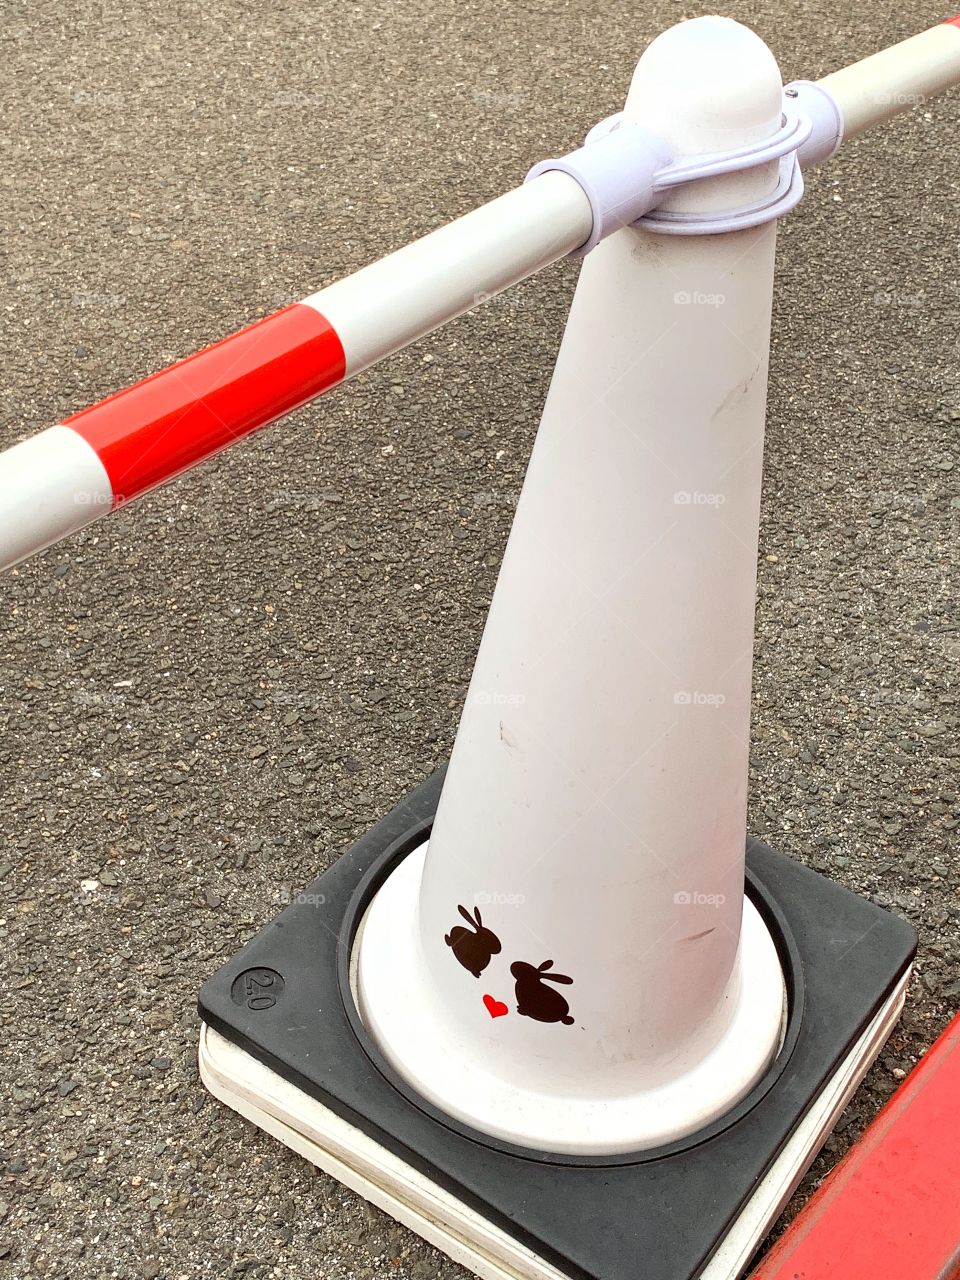 Street cone at bunny island